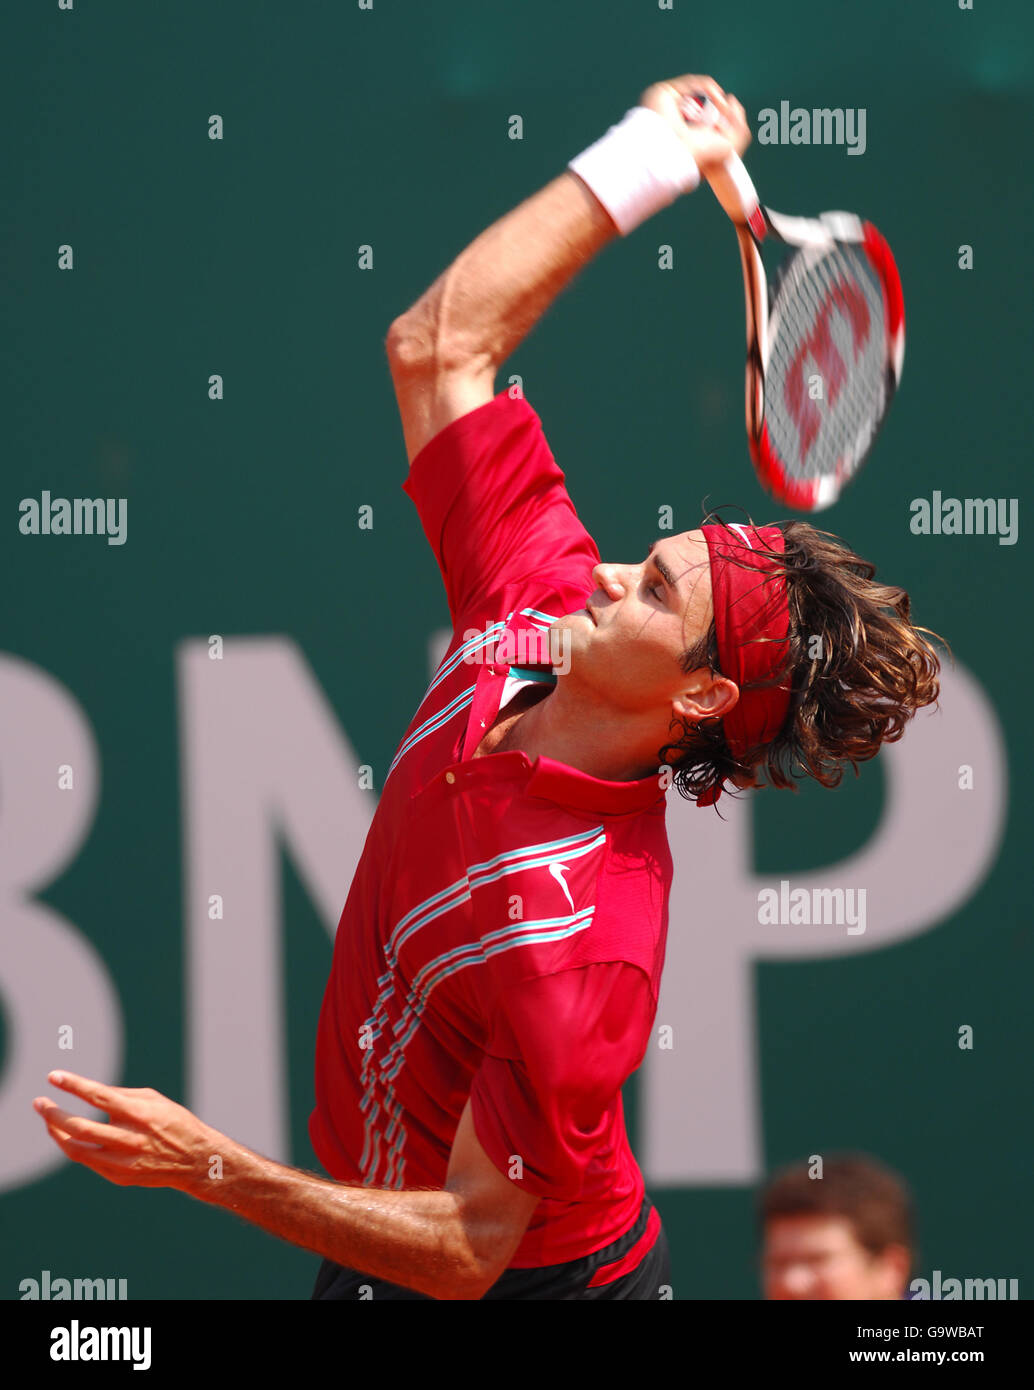 Tennis - ATP Masters Series - Monte Carlo - Halbfinale - Roger Federer gegen Juan Carlos Ferrero. Roger Federer aus der Schweiz Stockfoto